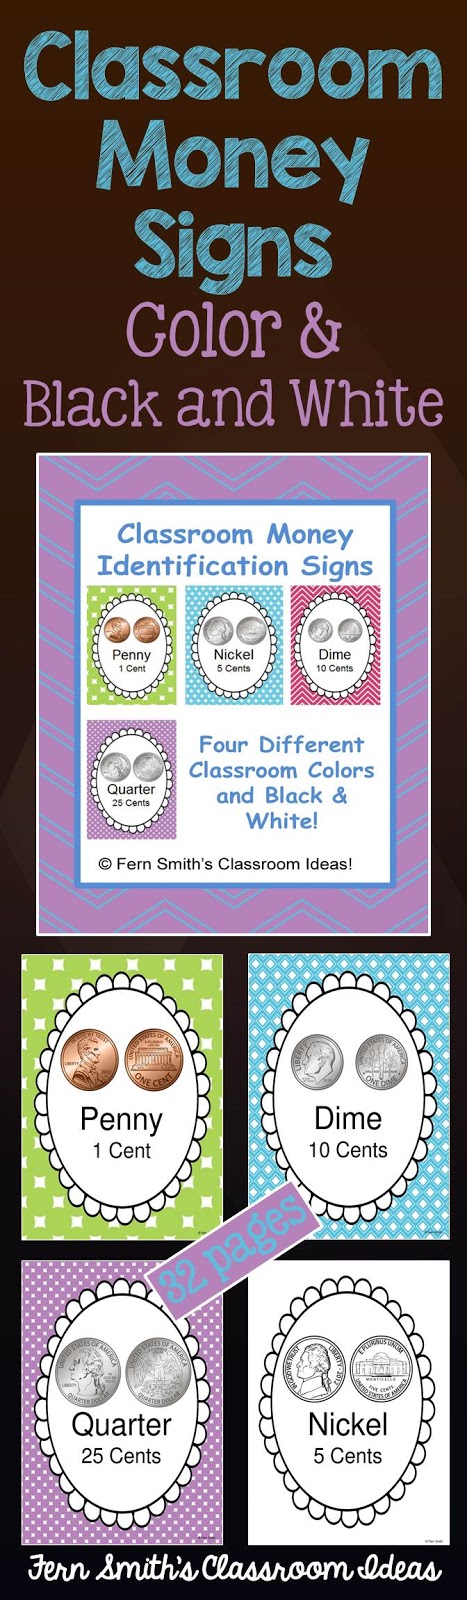 Fern Smith's Classroom Ideas Classroom Money Signs and Books at TeachersPayTeachers